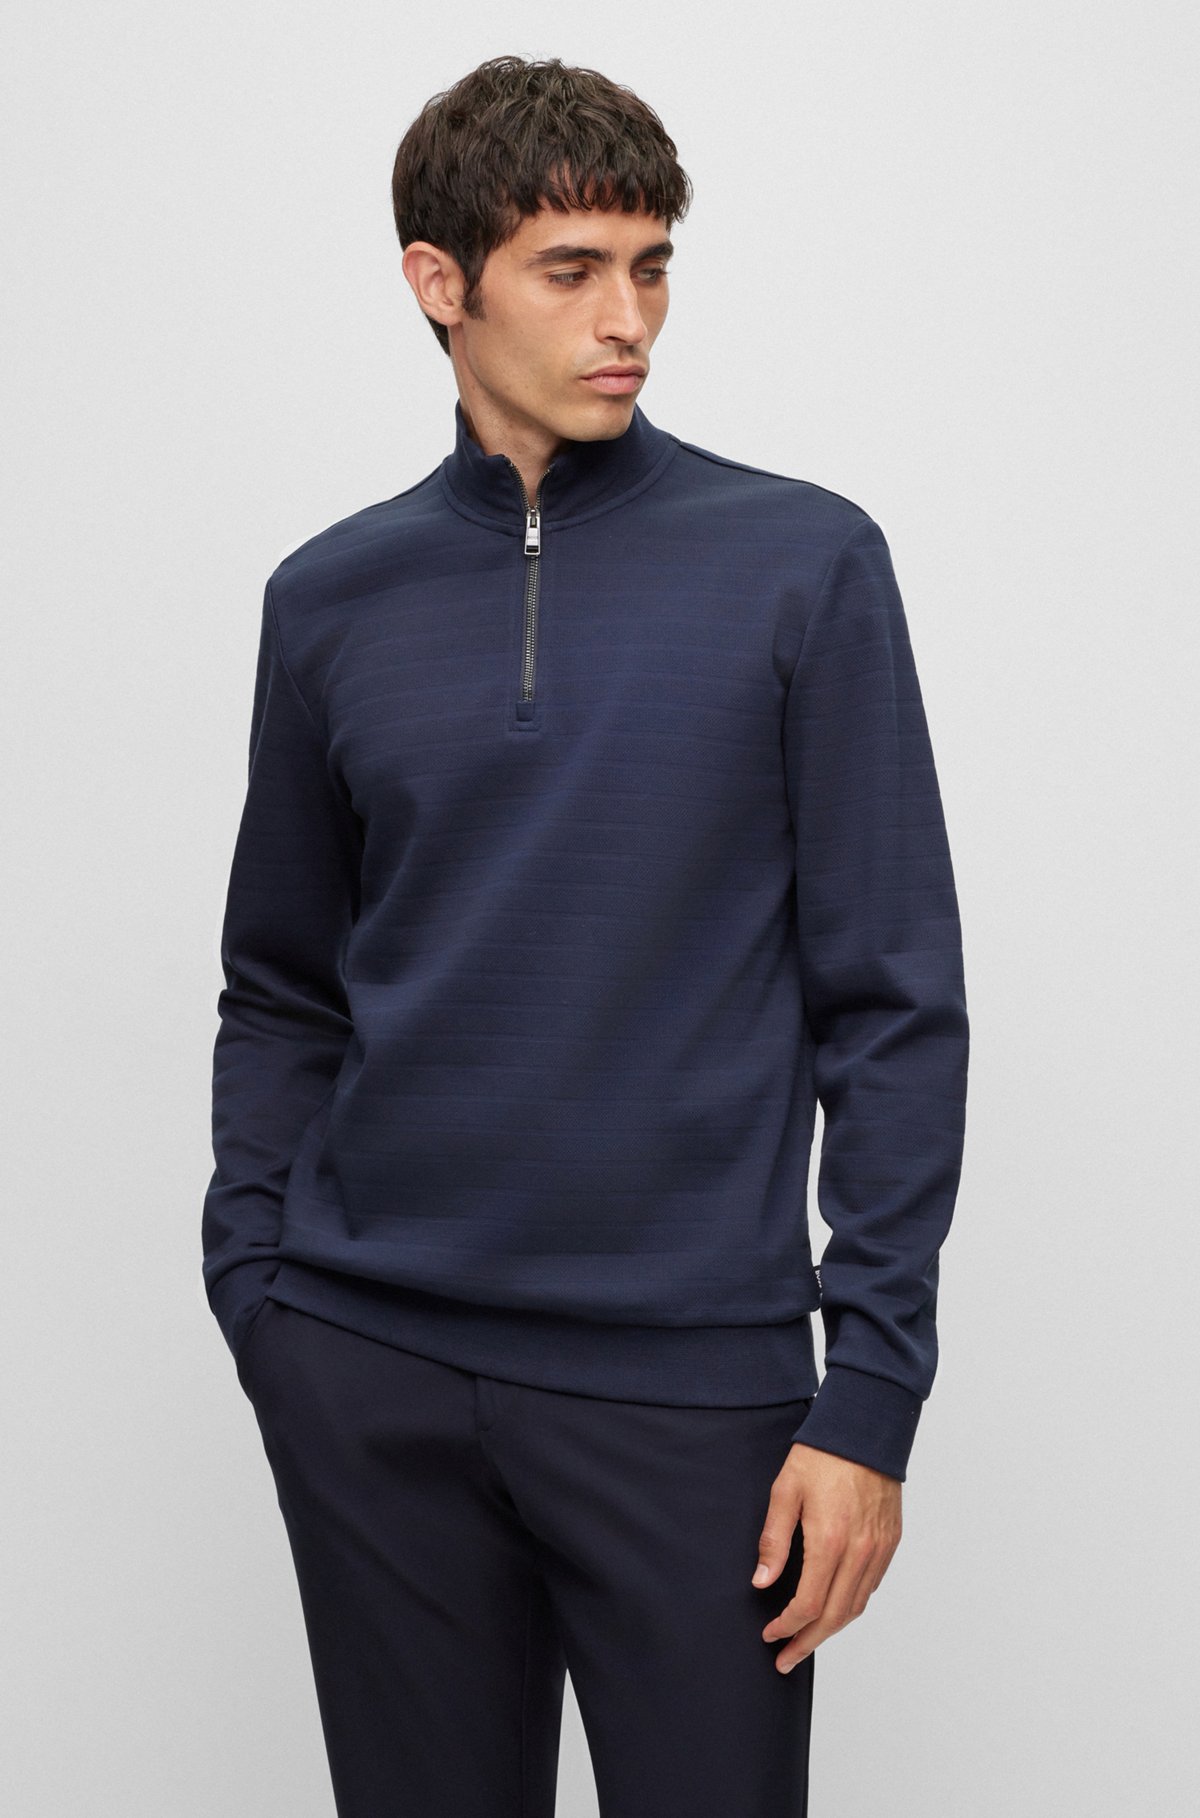 BOSS - Zip-neck sweatshirt in mercerized cotton jacquard